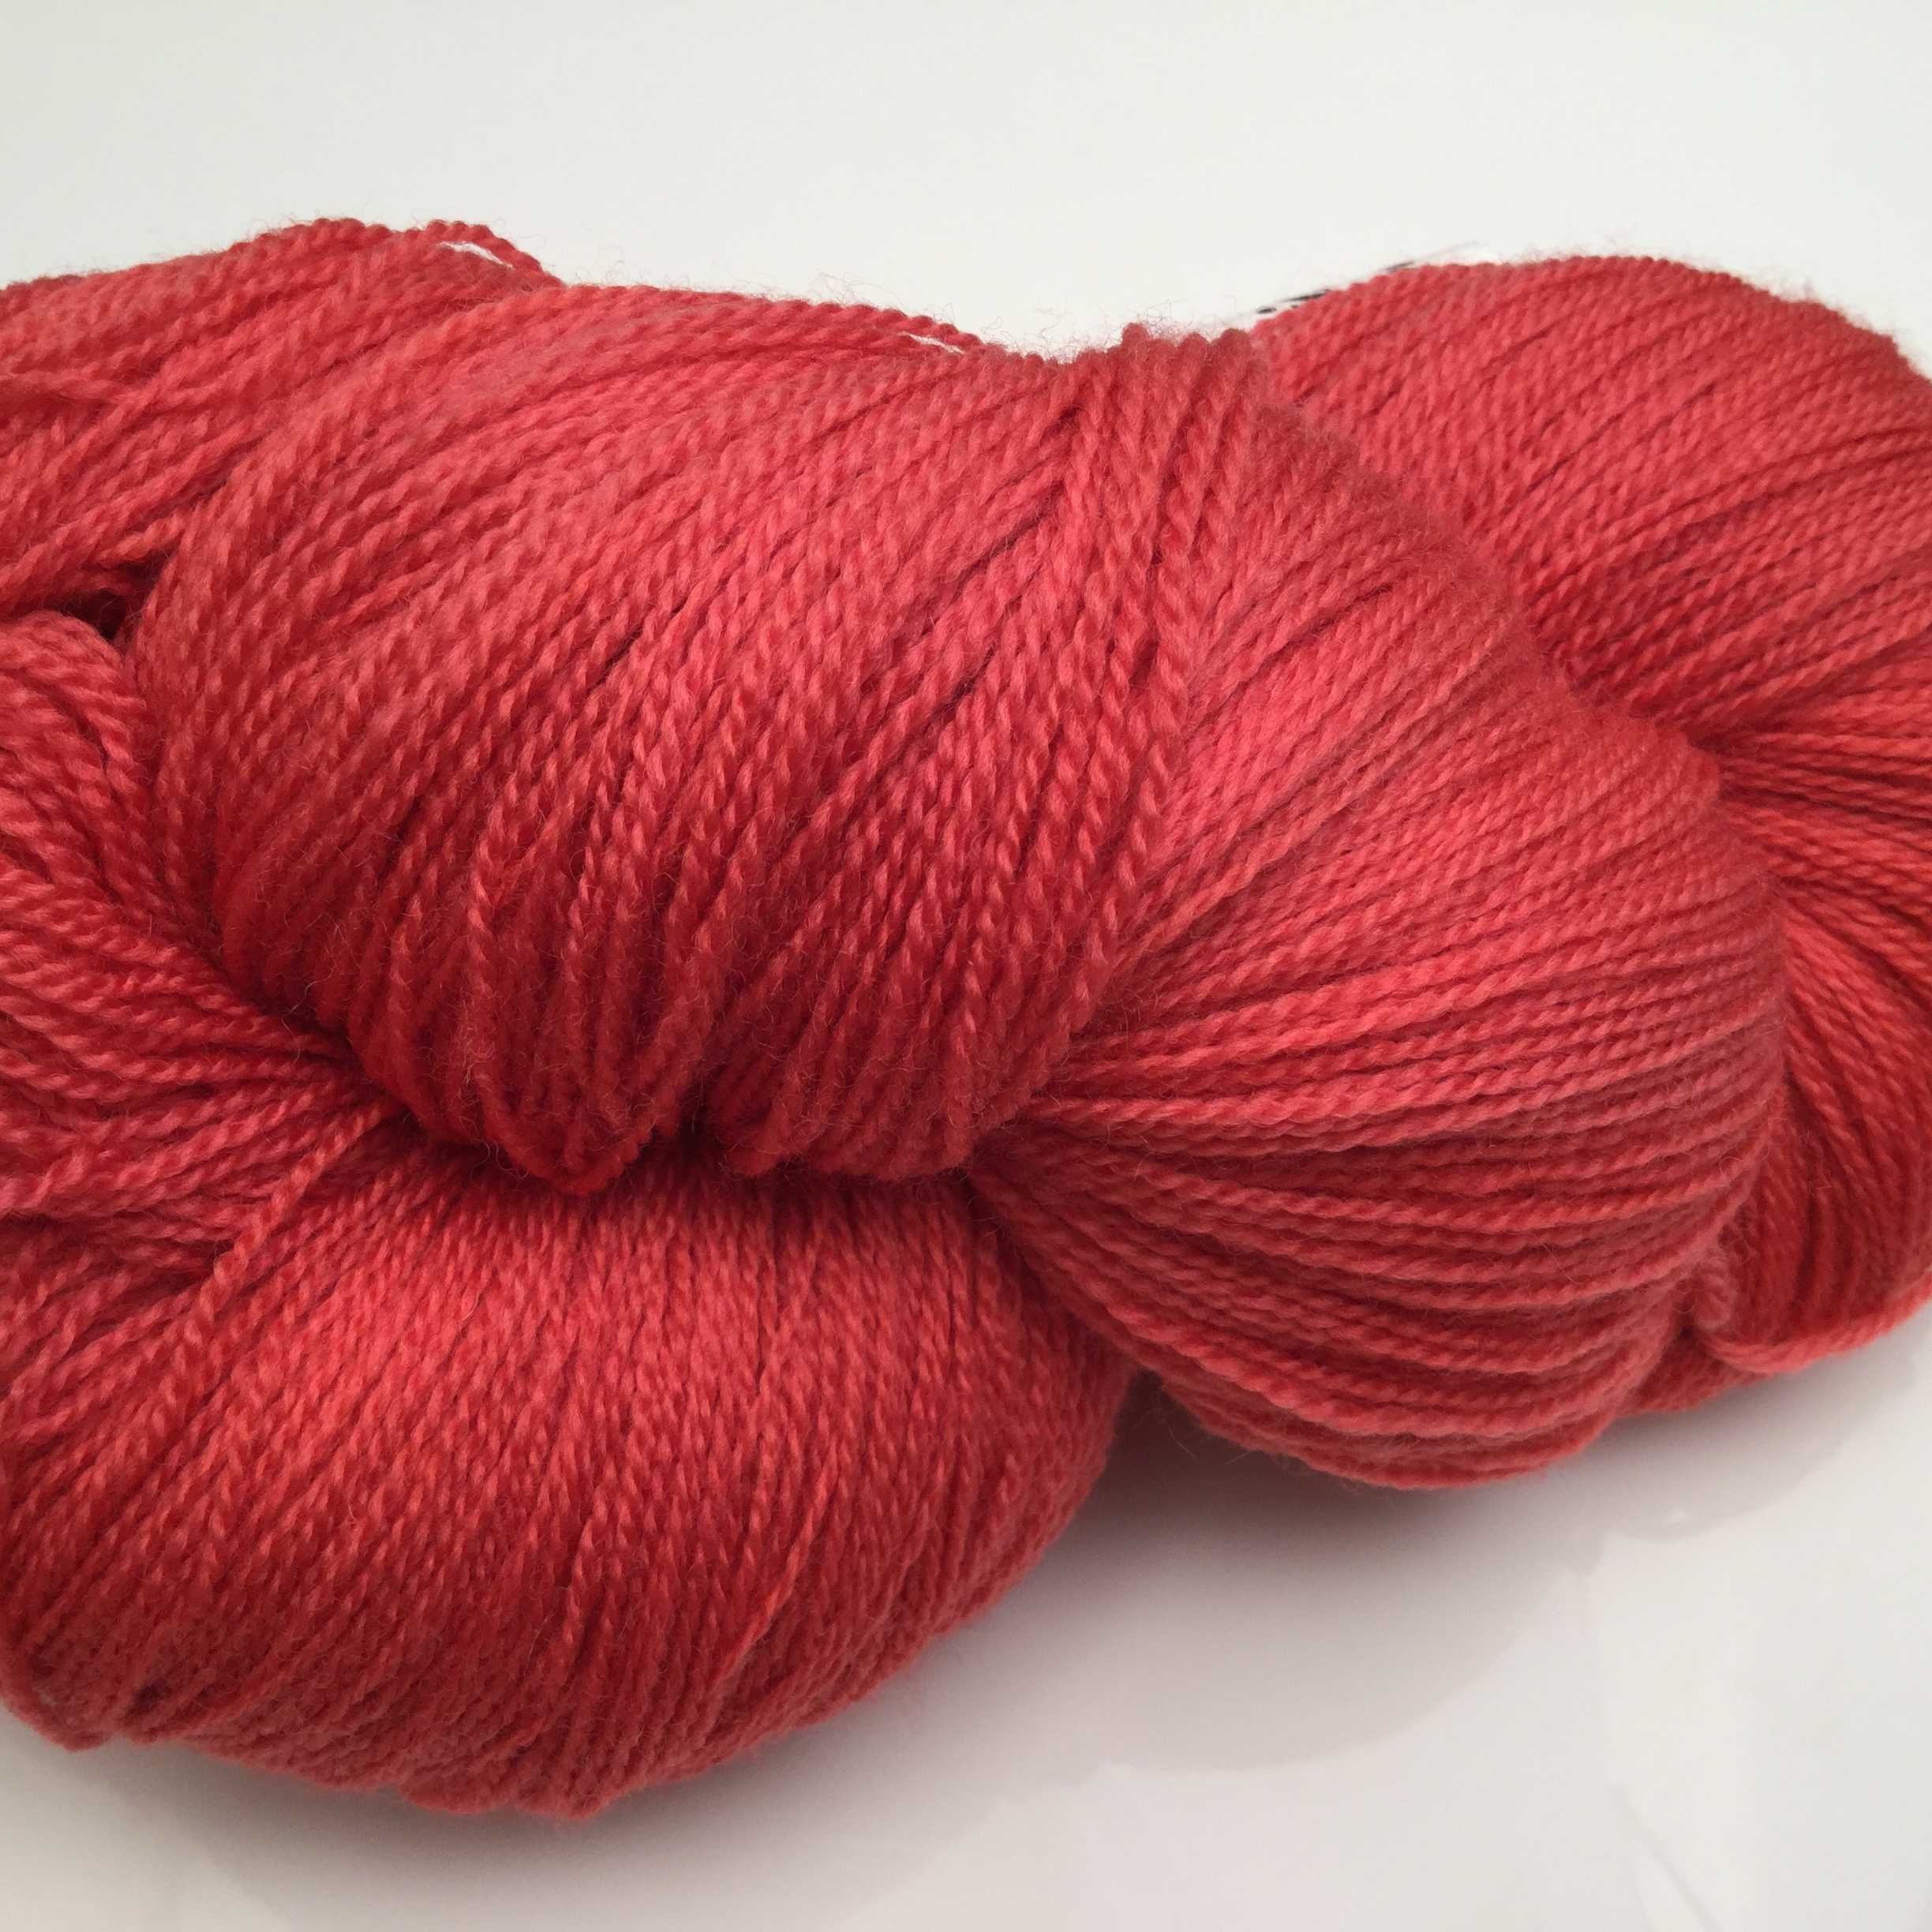 Ivy Brambles Romantica Merino Lace Yarn - 141 Cranberry Harvest